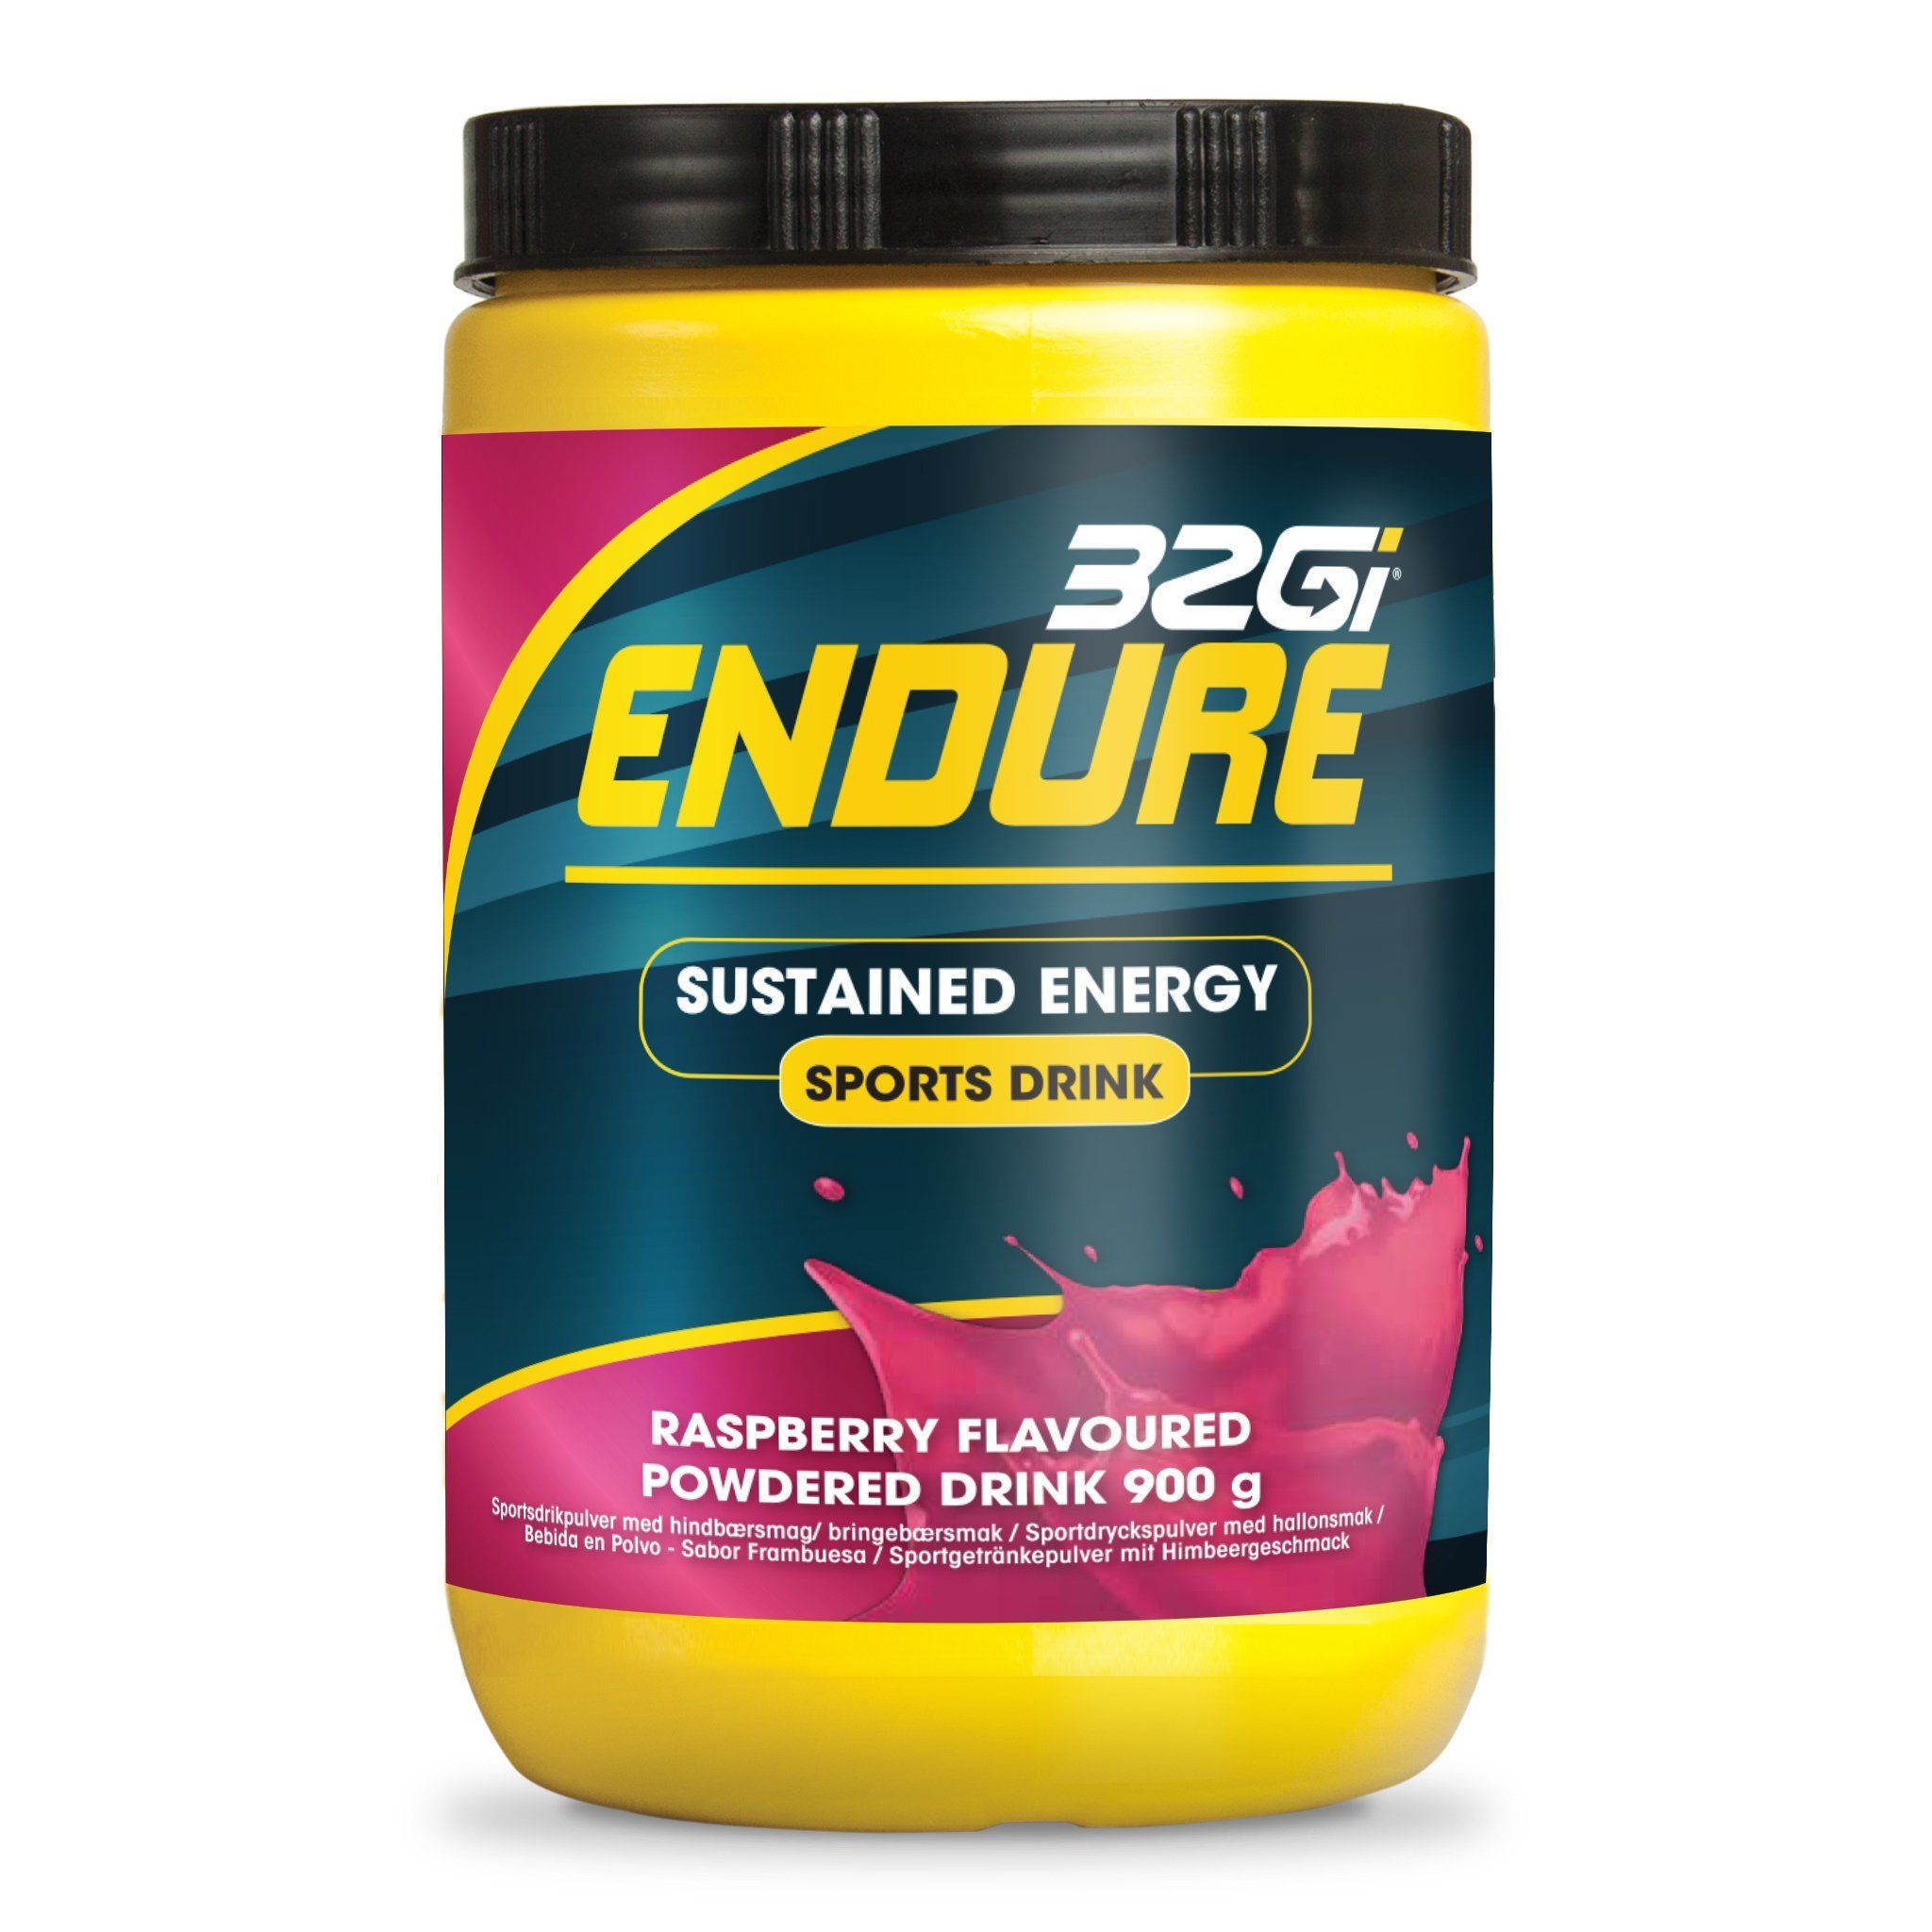  Endure Sports Drink - Sustained Energy (Tub) 